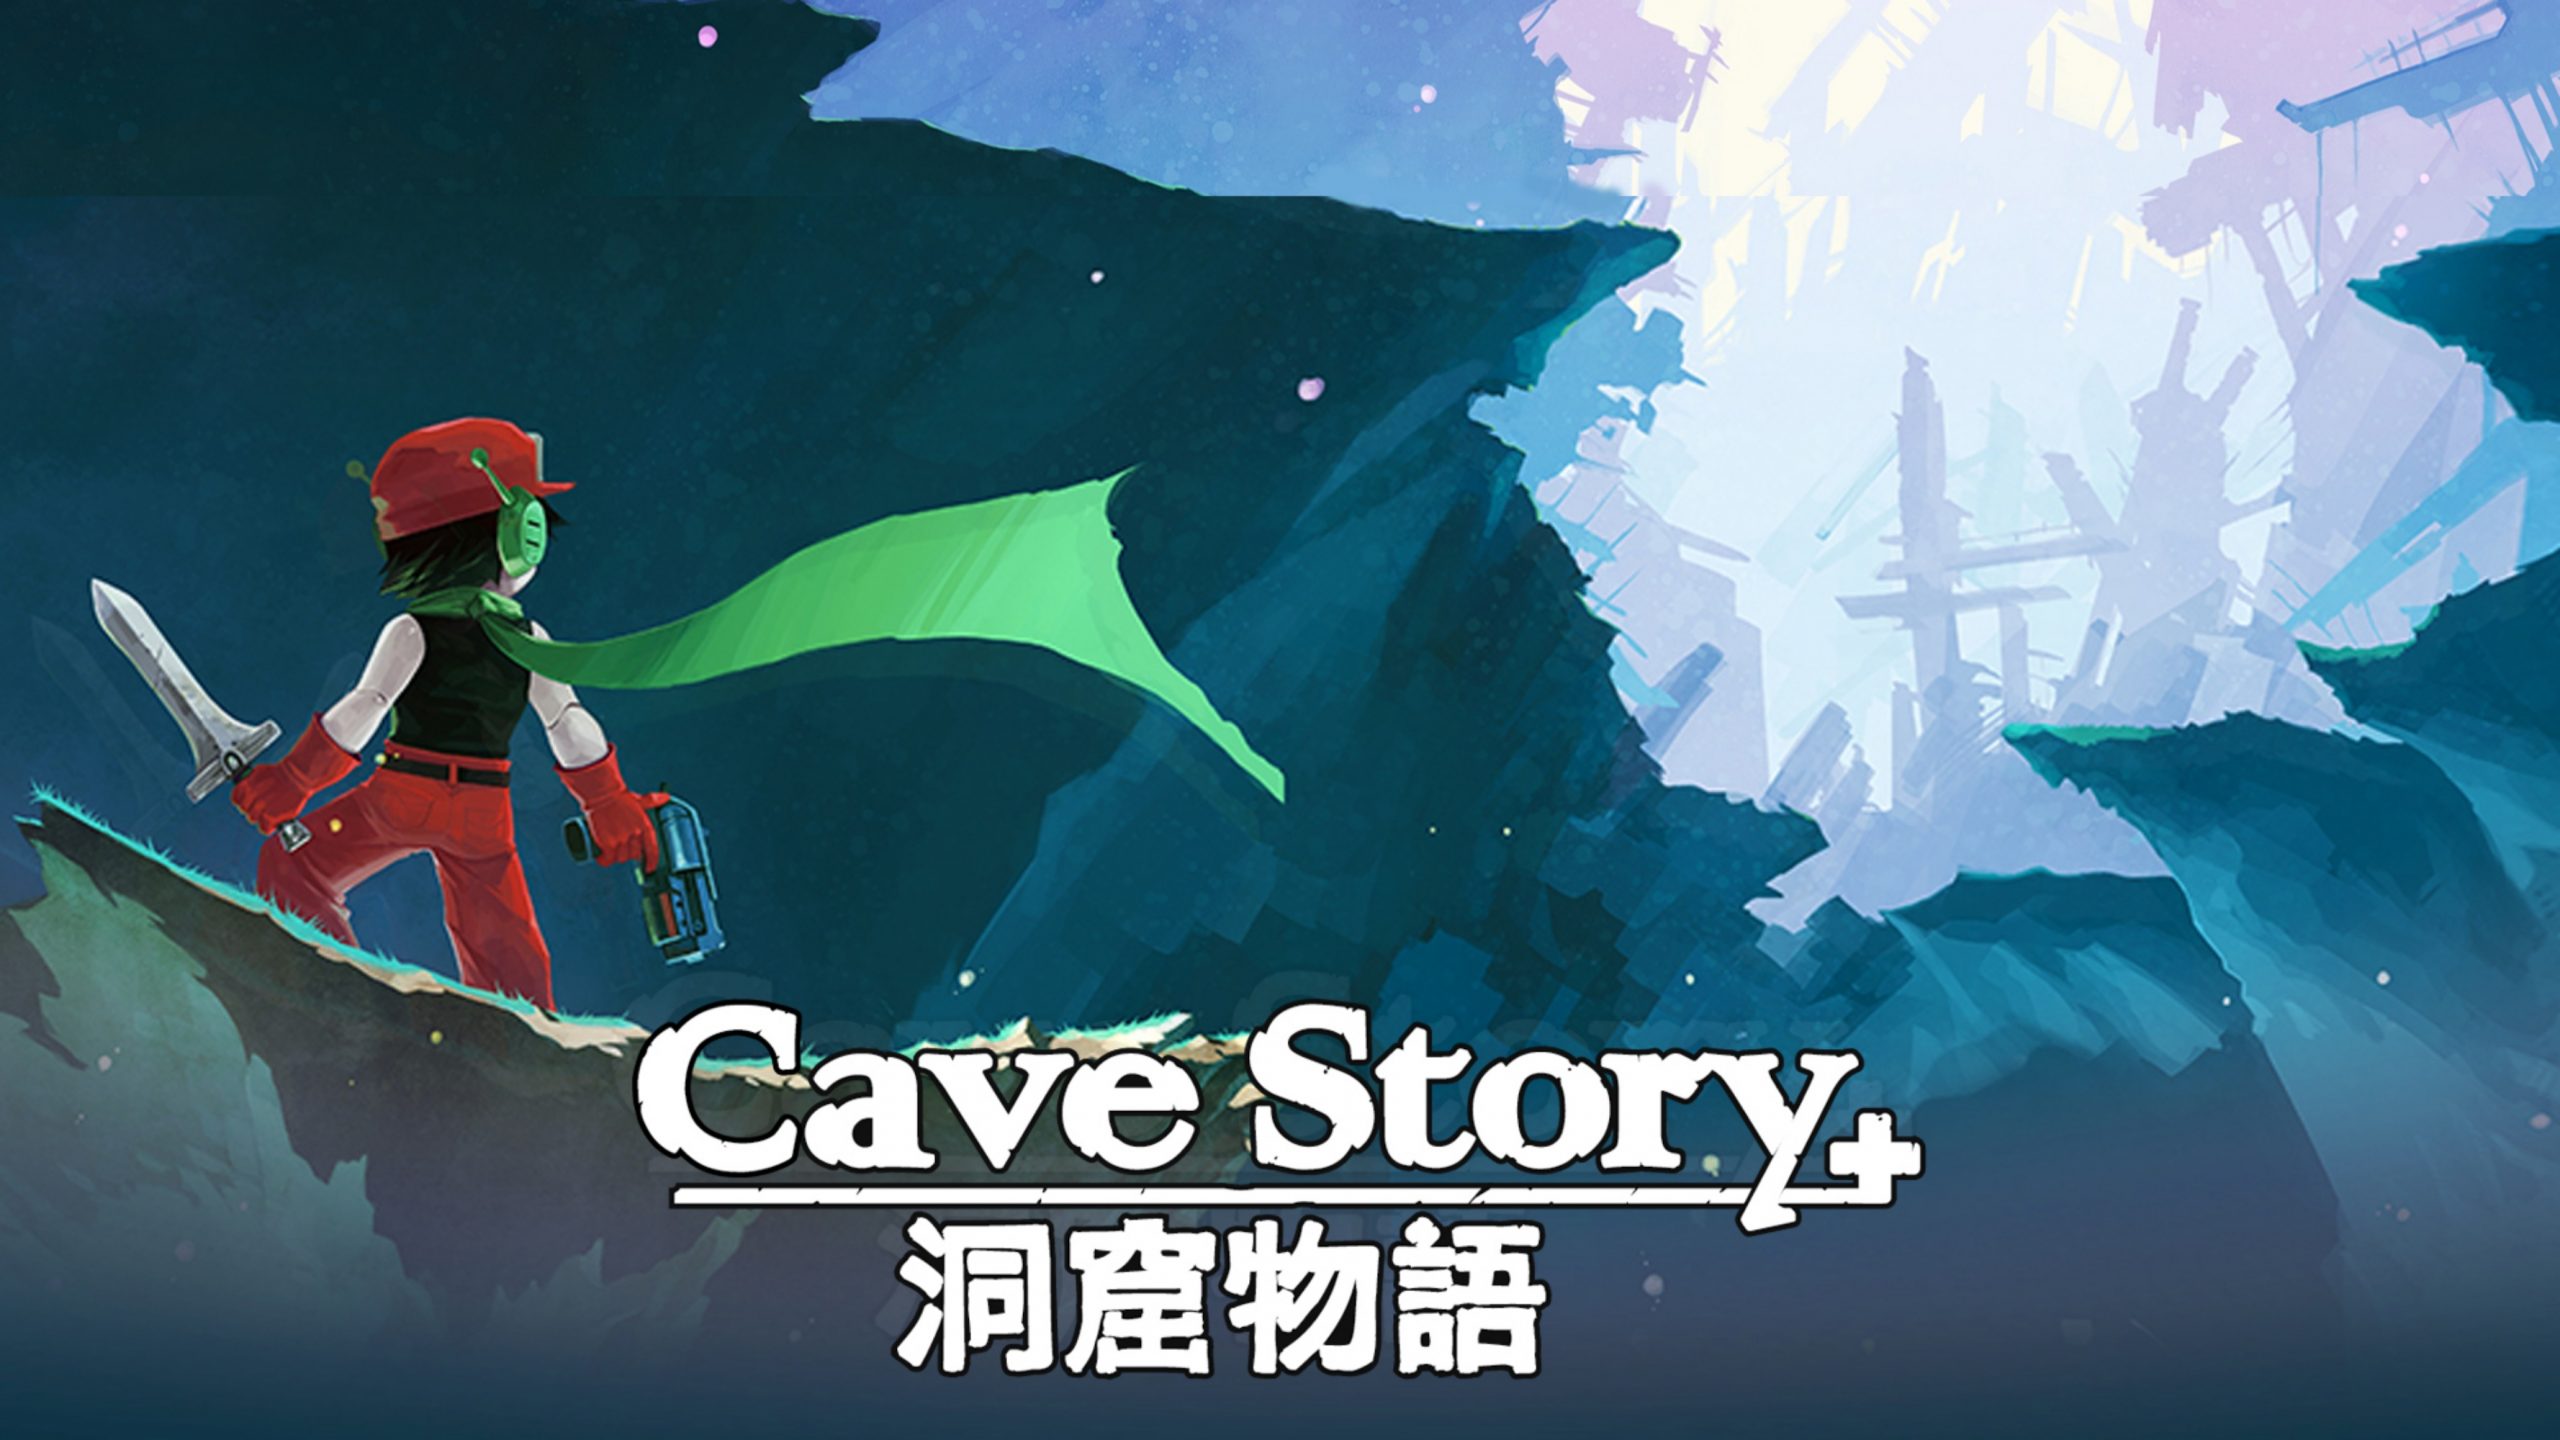 В Epic Games бесплатно раздают Cave Story+